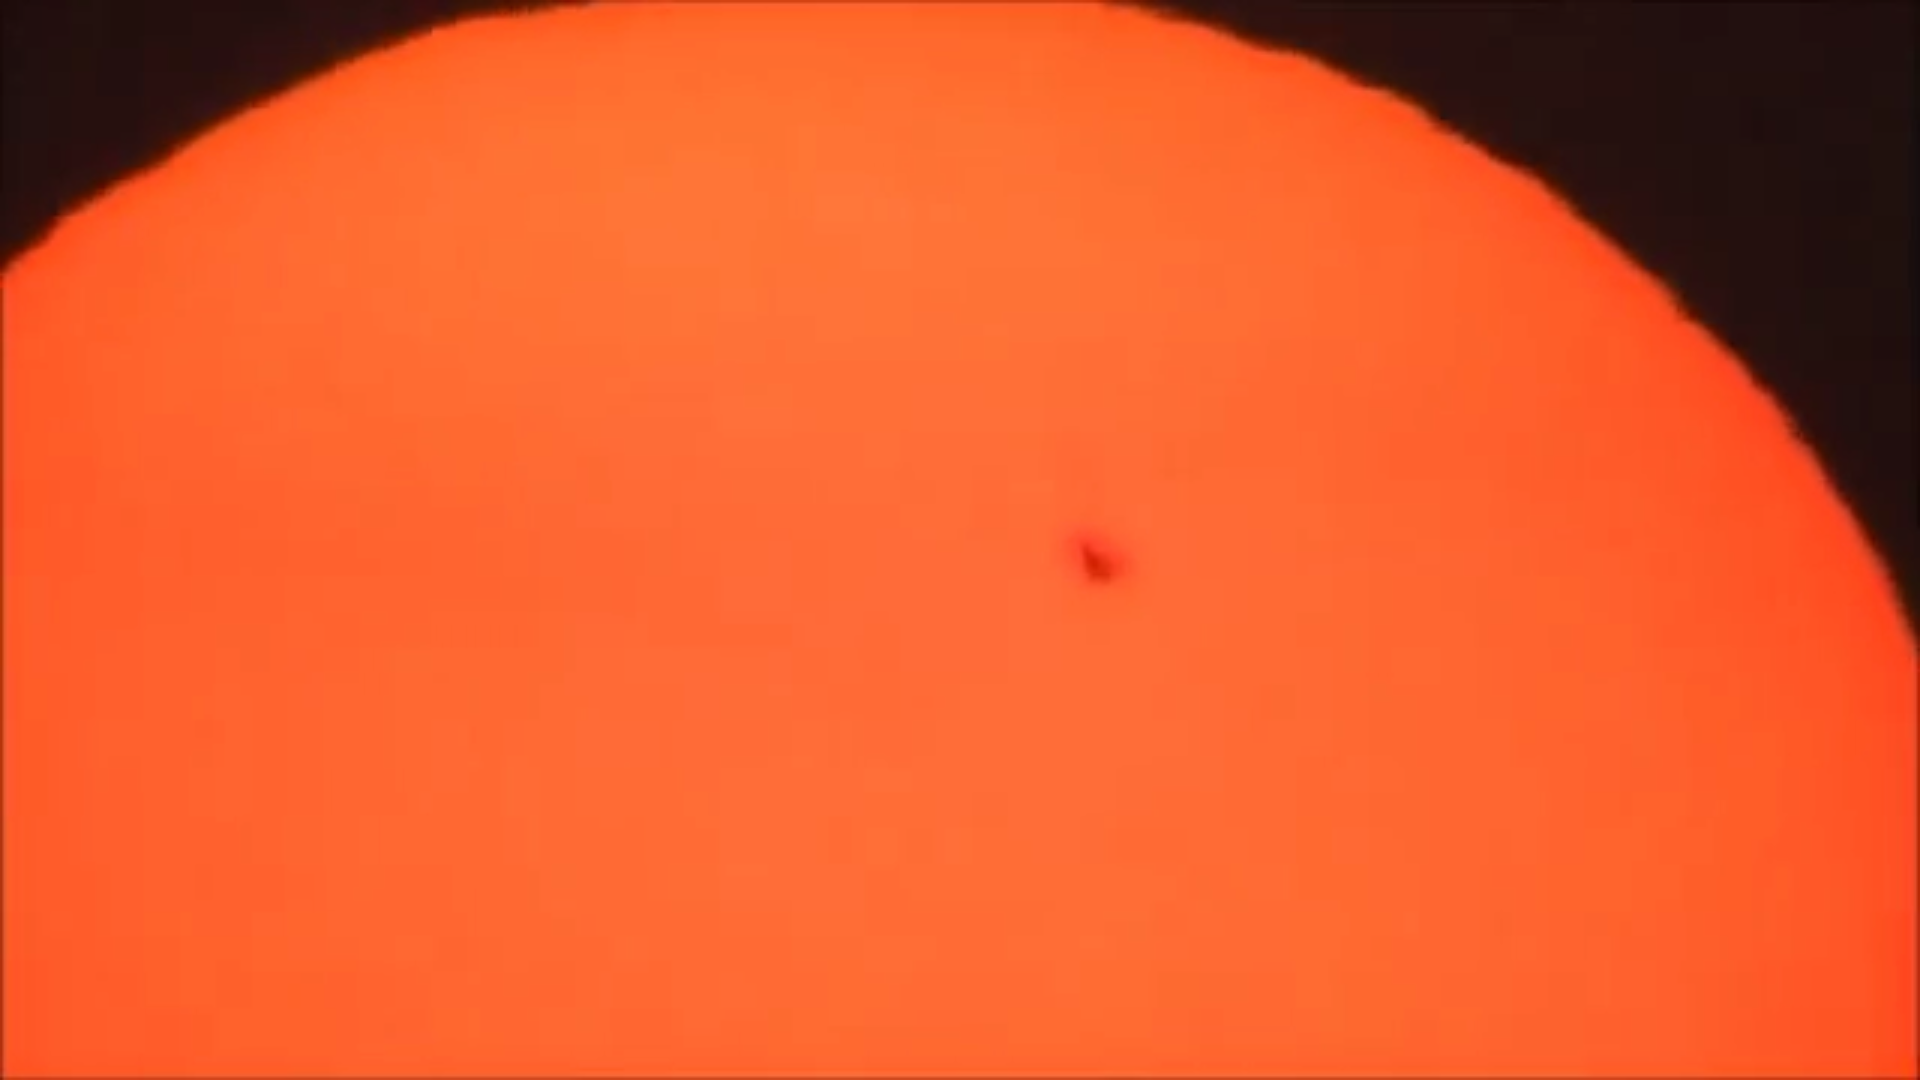 Primicia Mundial: Vídeo de Nibíru, Planeta X cruzando el Sol, cada 32 días aseguran, vuelve a pasar.